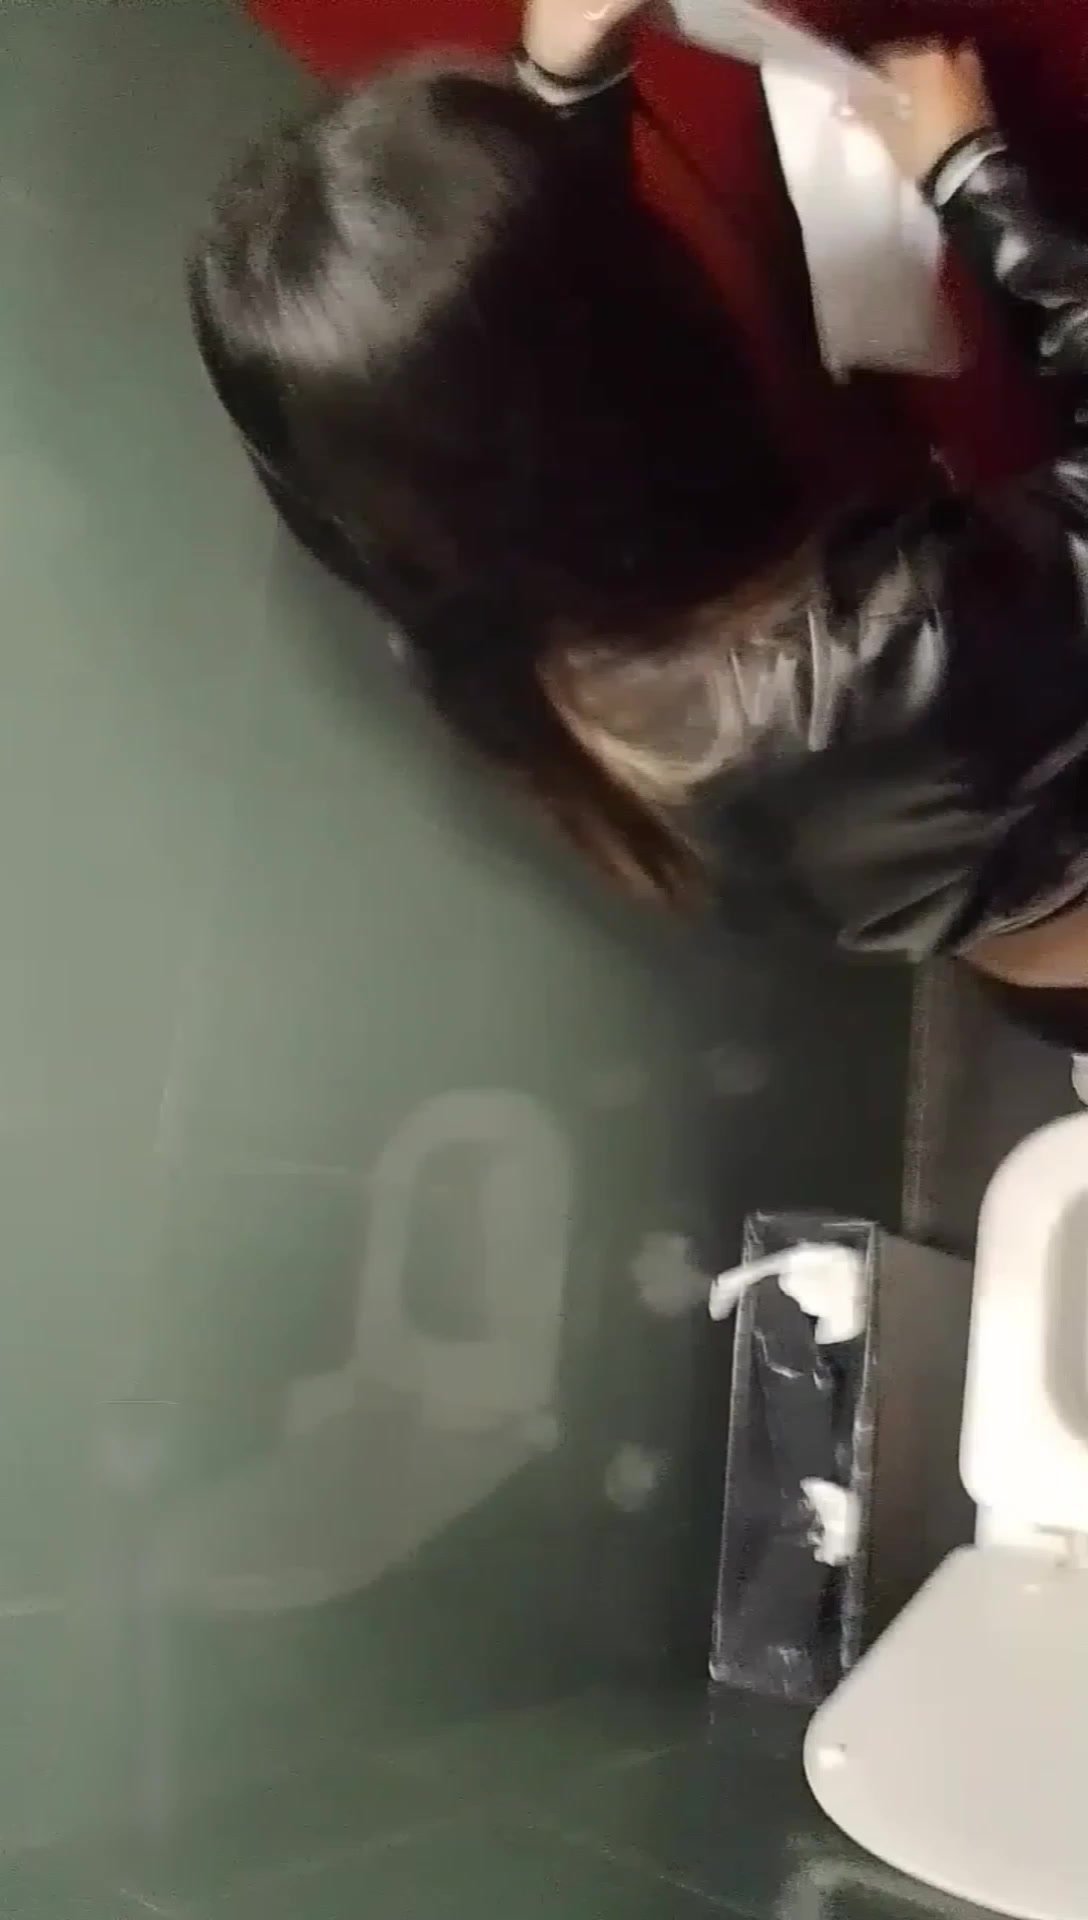 sweet girl cleaning herself in public bathroom